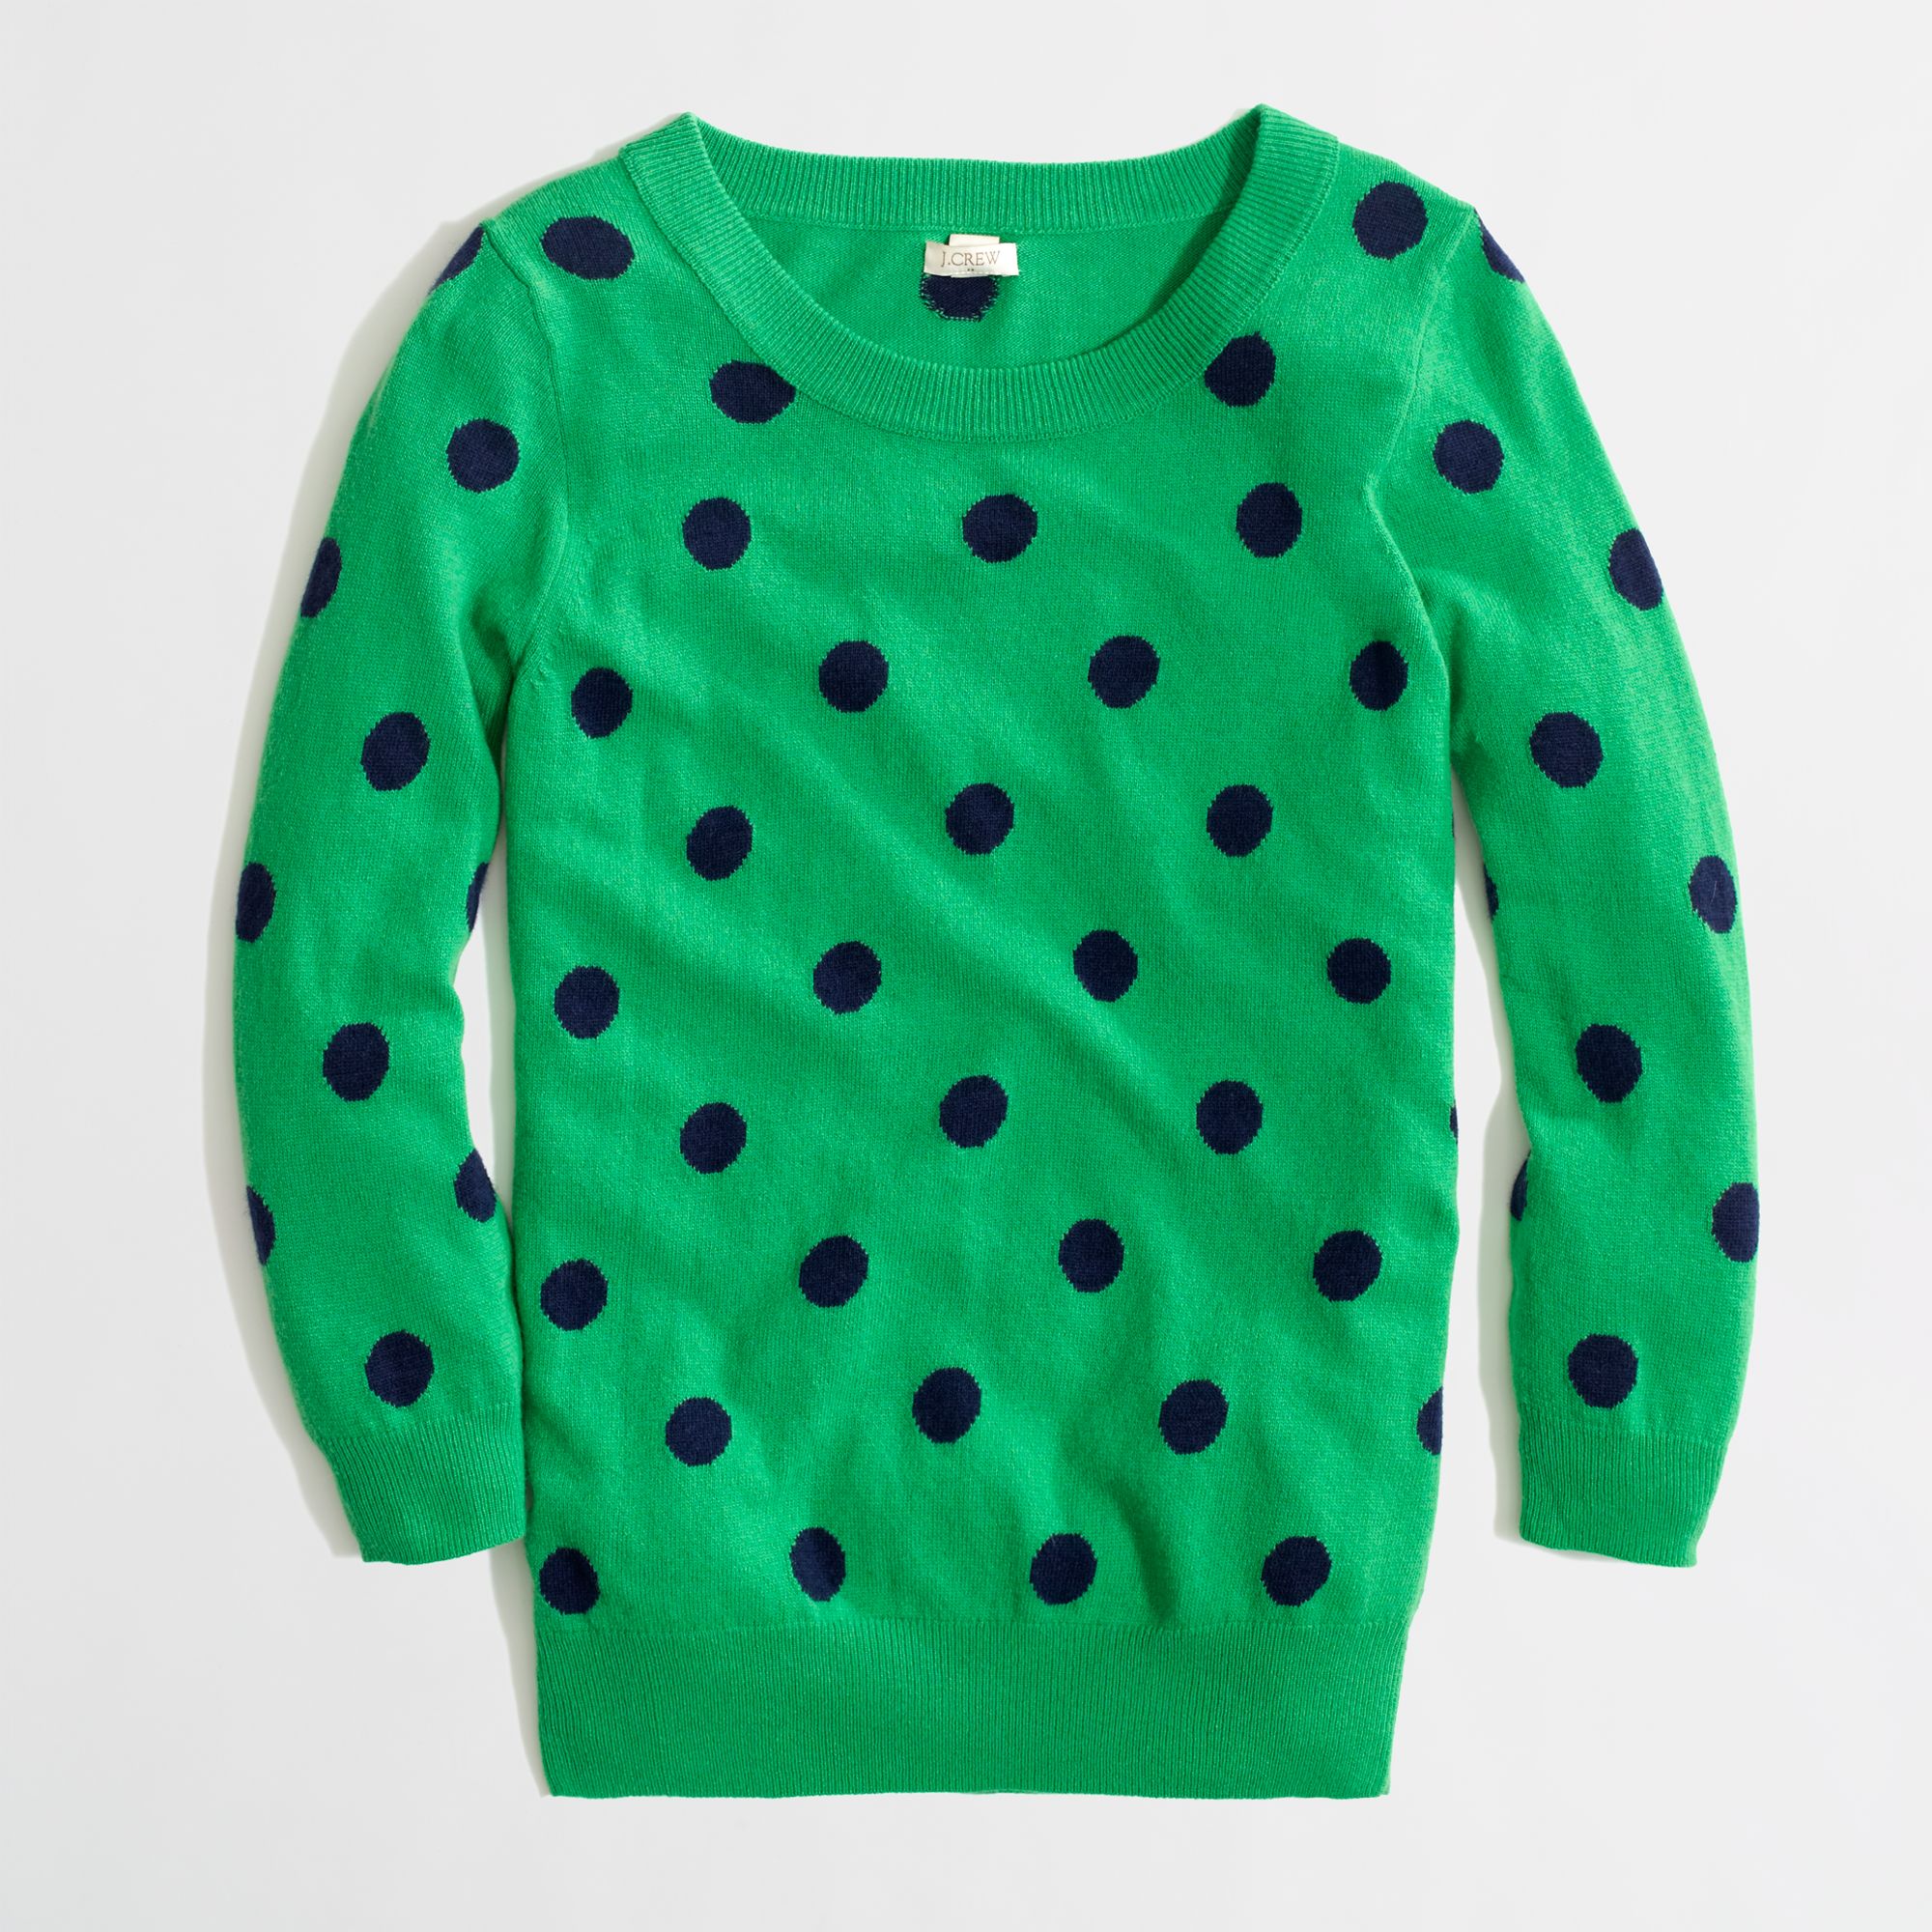 J.Crew Factory Intarsia Charley Sweater in Polka Dot in Green | Lyst